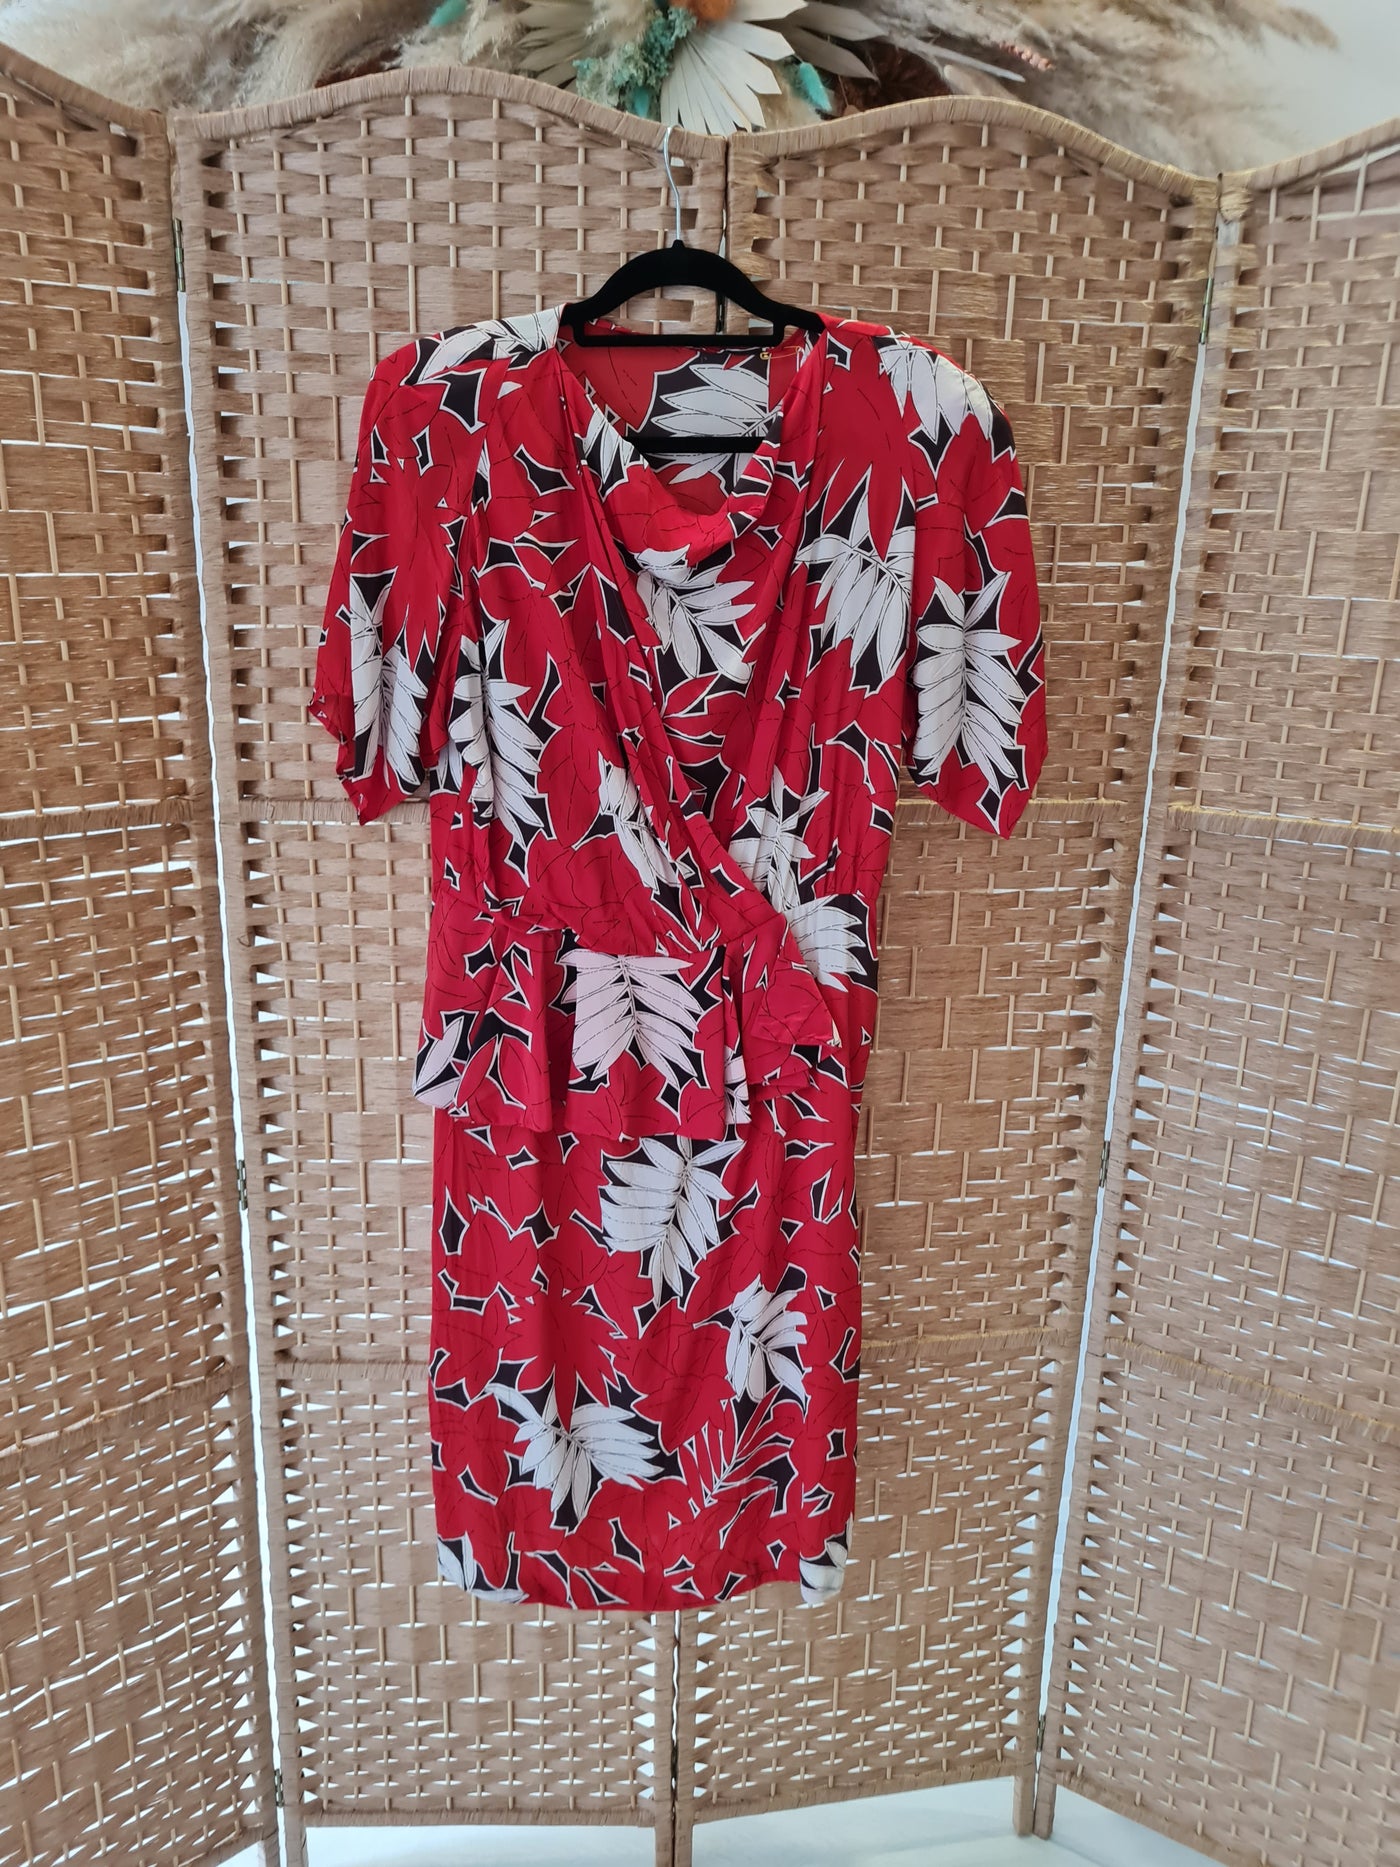 1980s Midi 'Red Fern' with peplum Dress 14/16